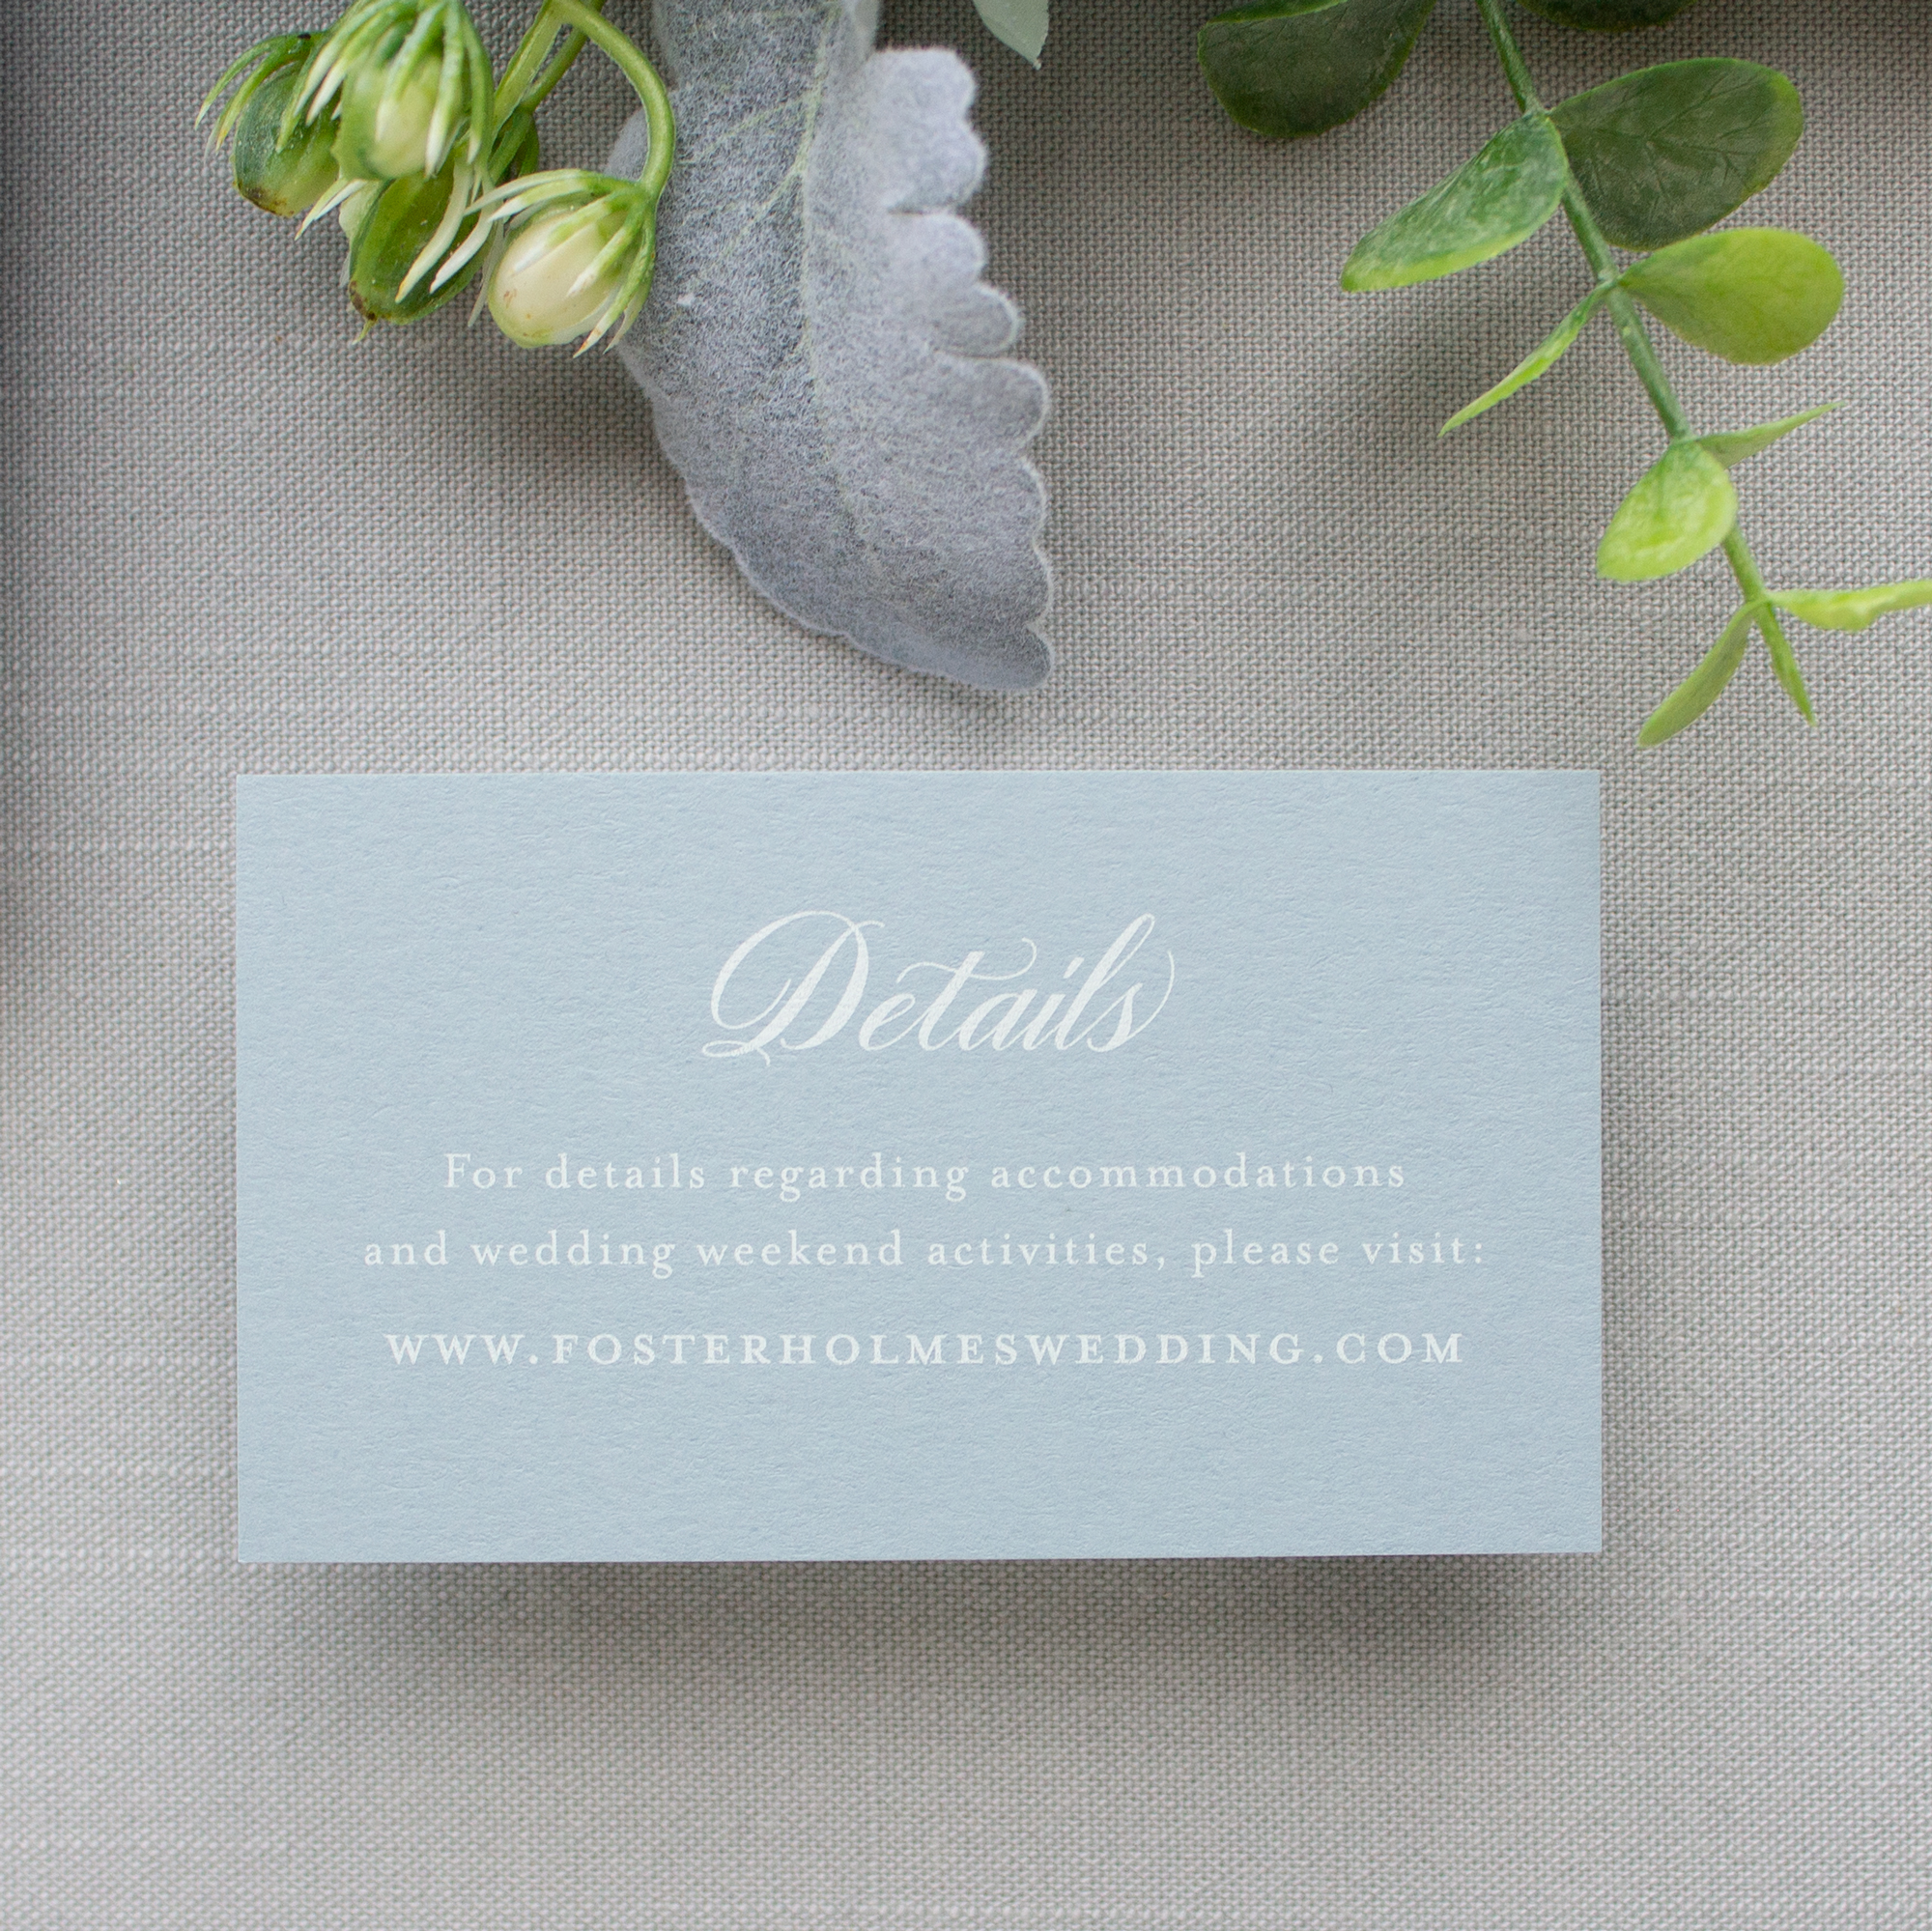 details insert card with wedding website